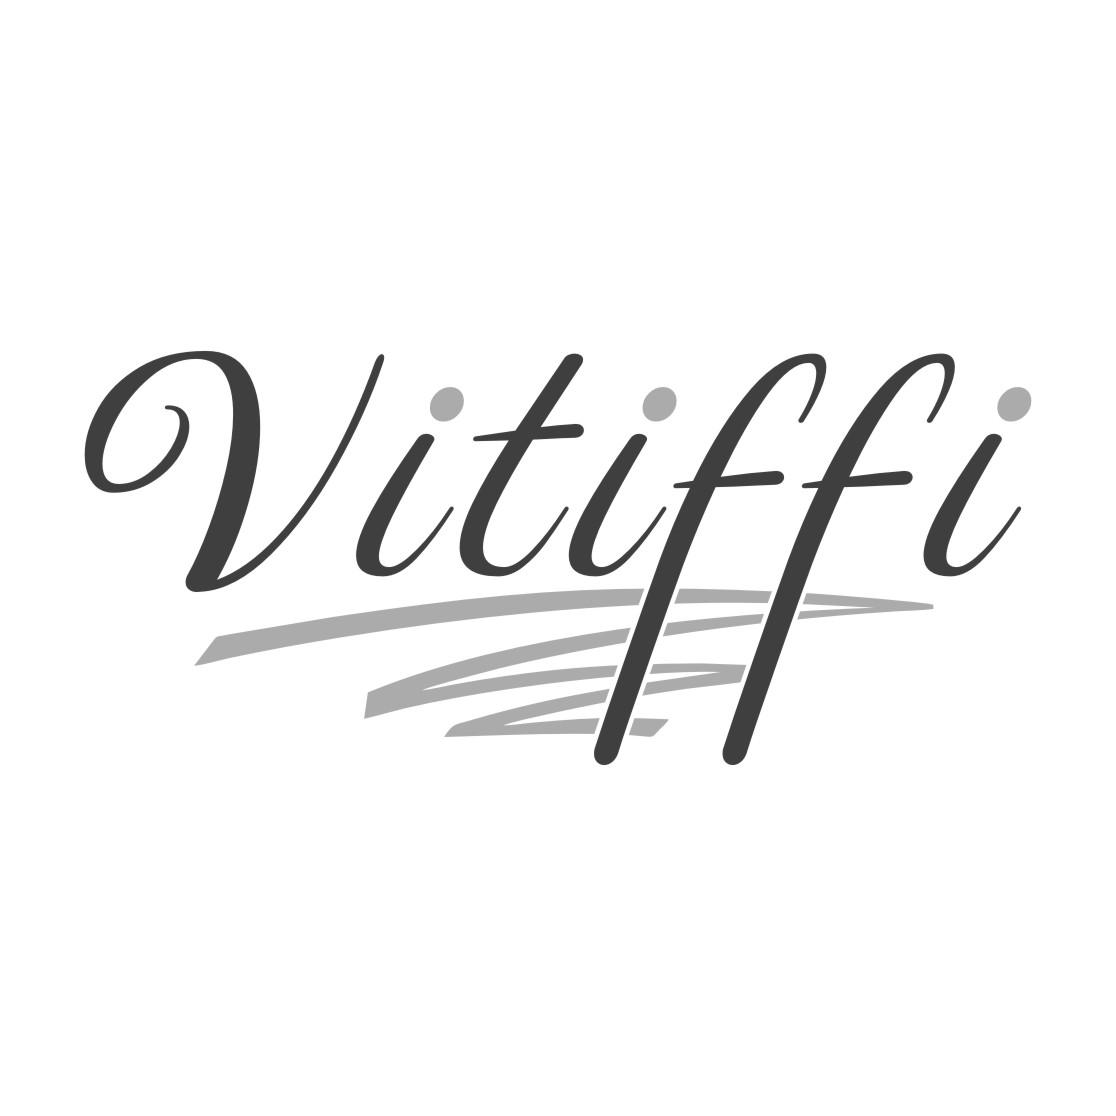 VITIFFI